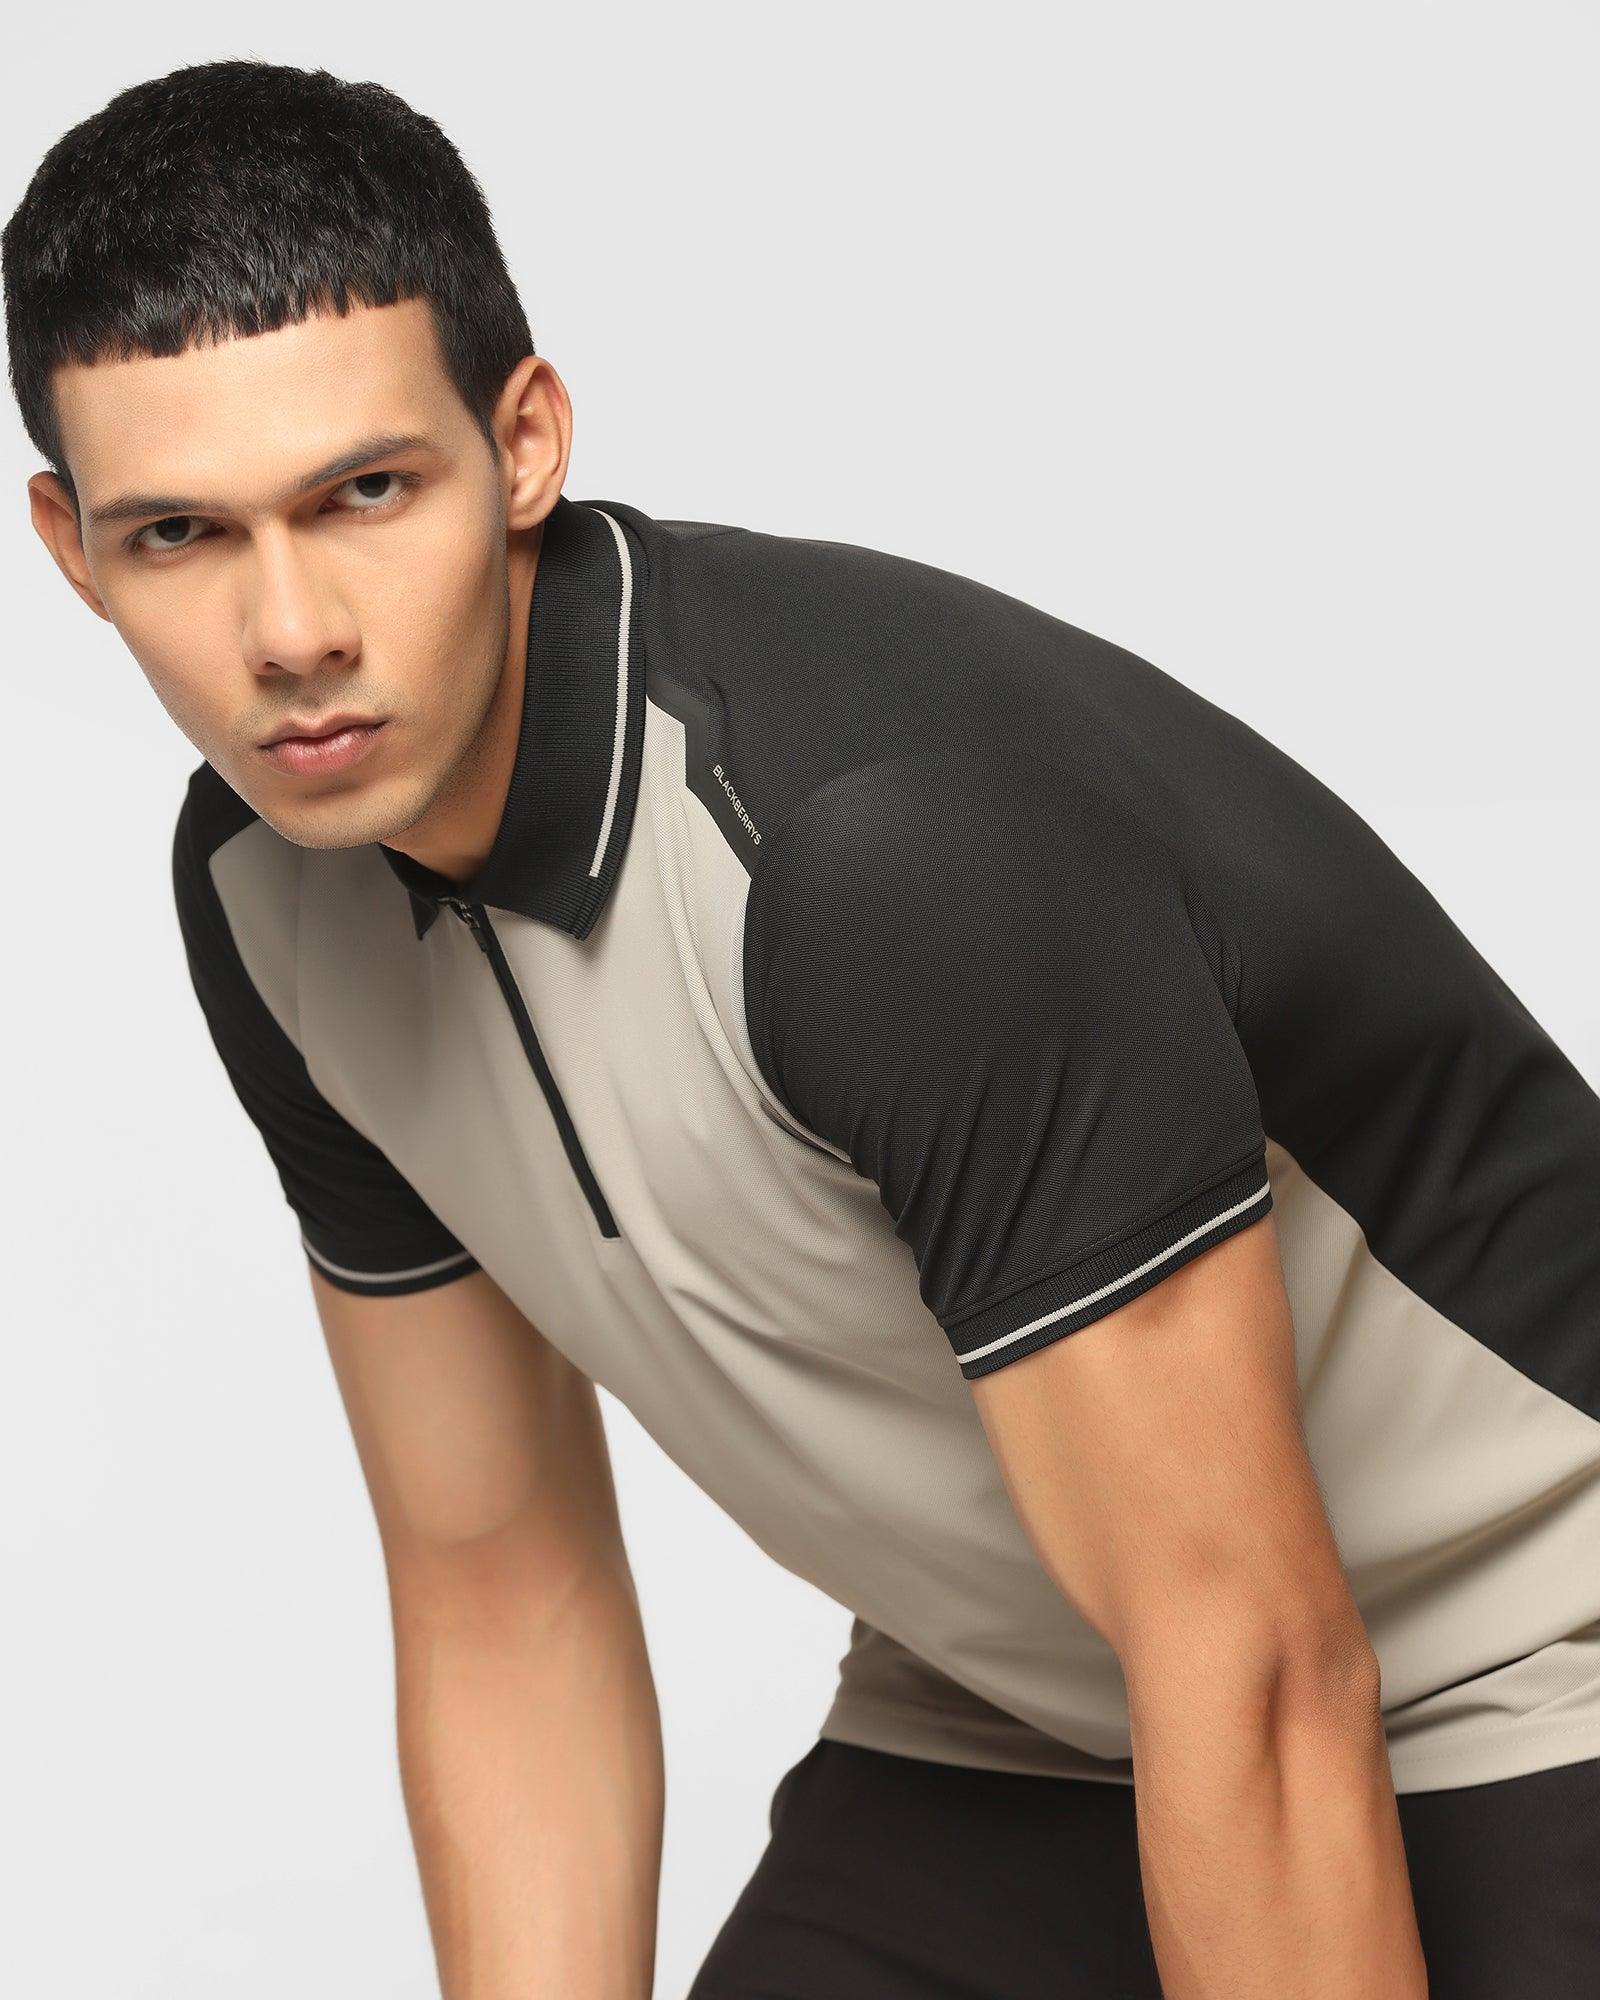 TechPro Polo Black Solid T Shirt - Forward